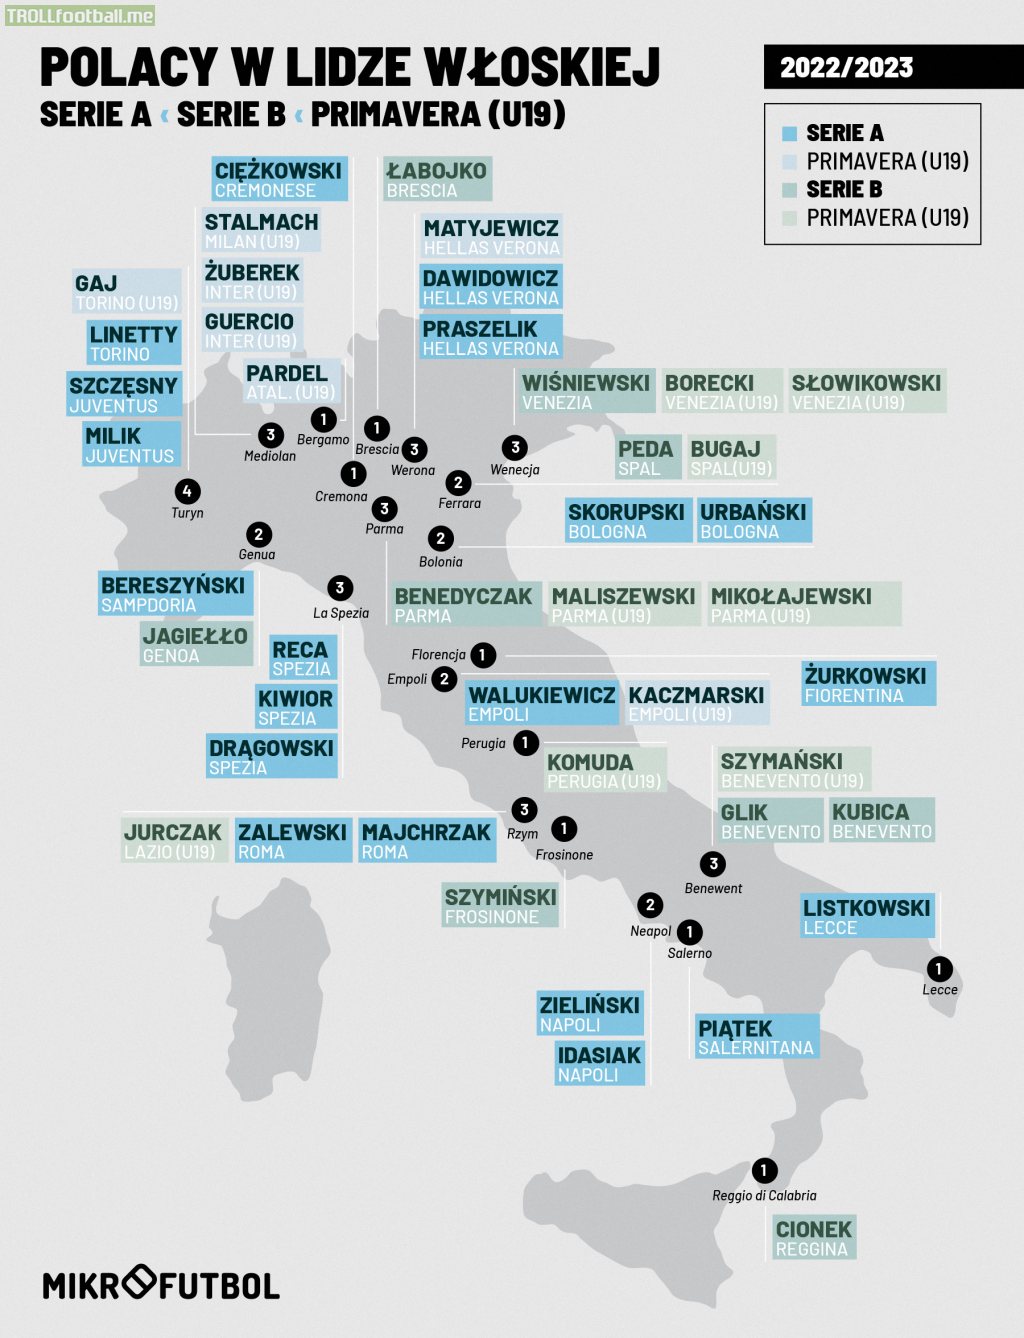 Polish players in Italian football (Serie A, Serie B, and Primavera)